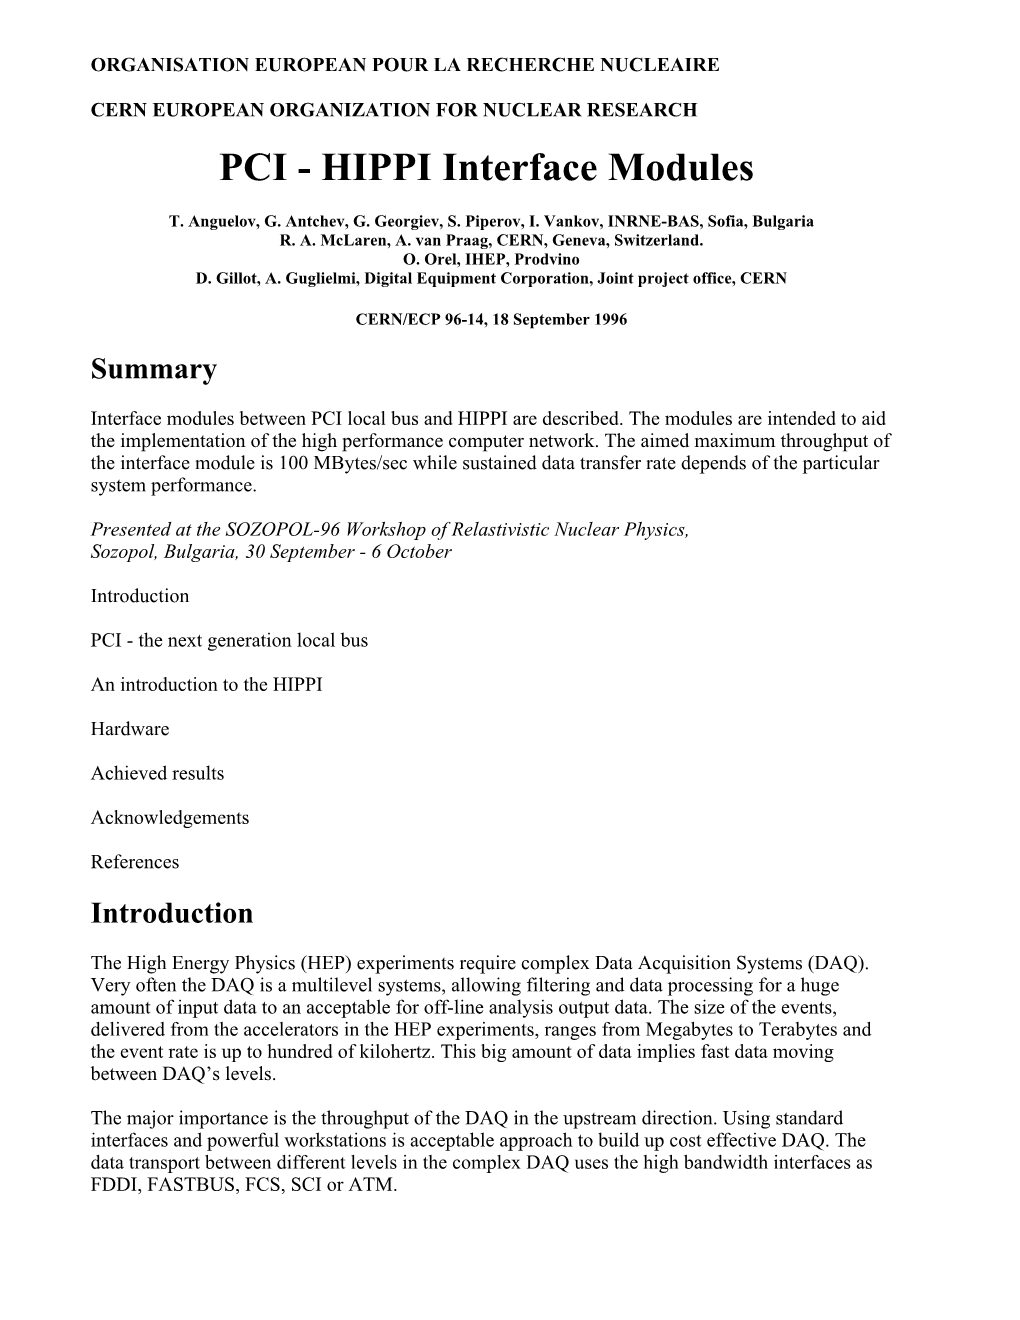 PCI-HIPPI Interface Modules